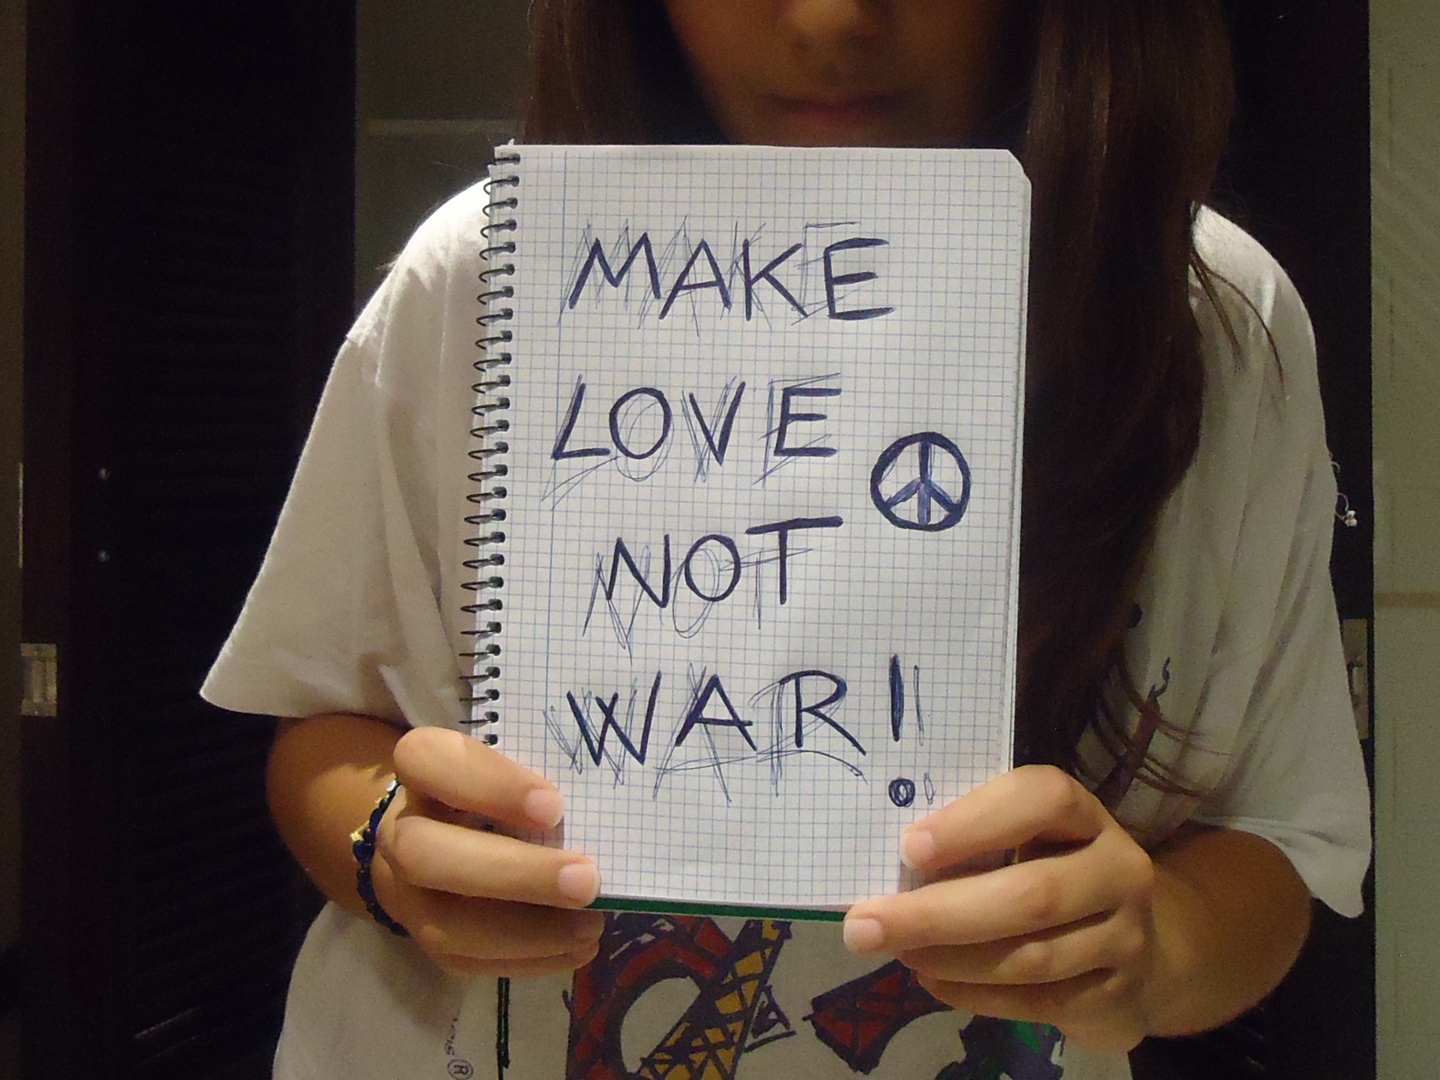 Make love not war.